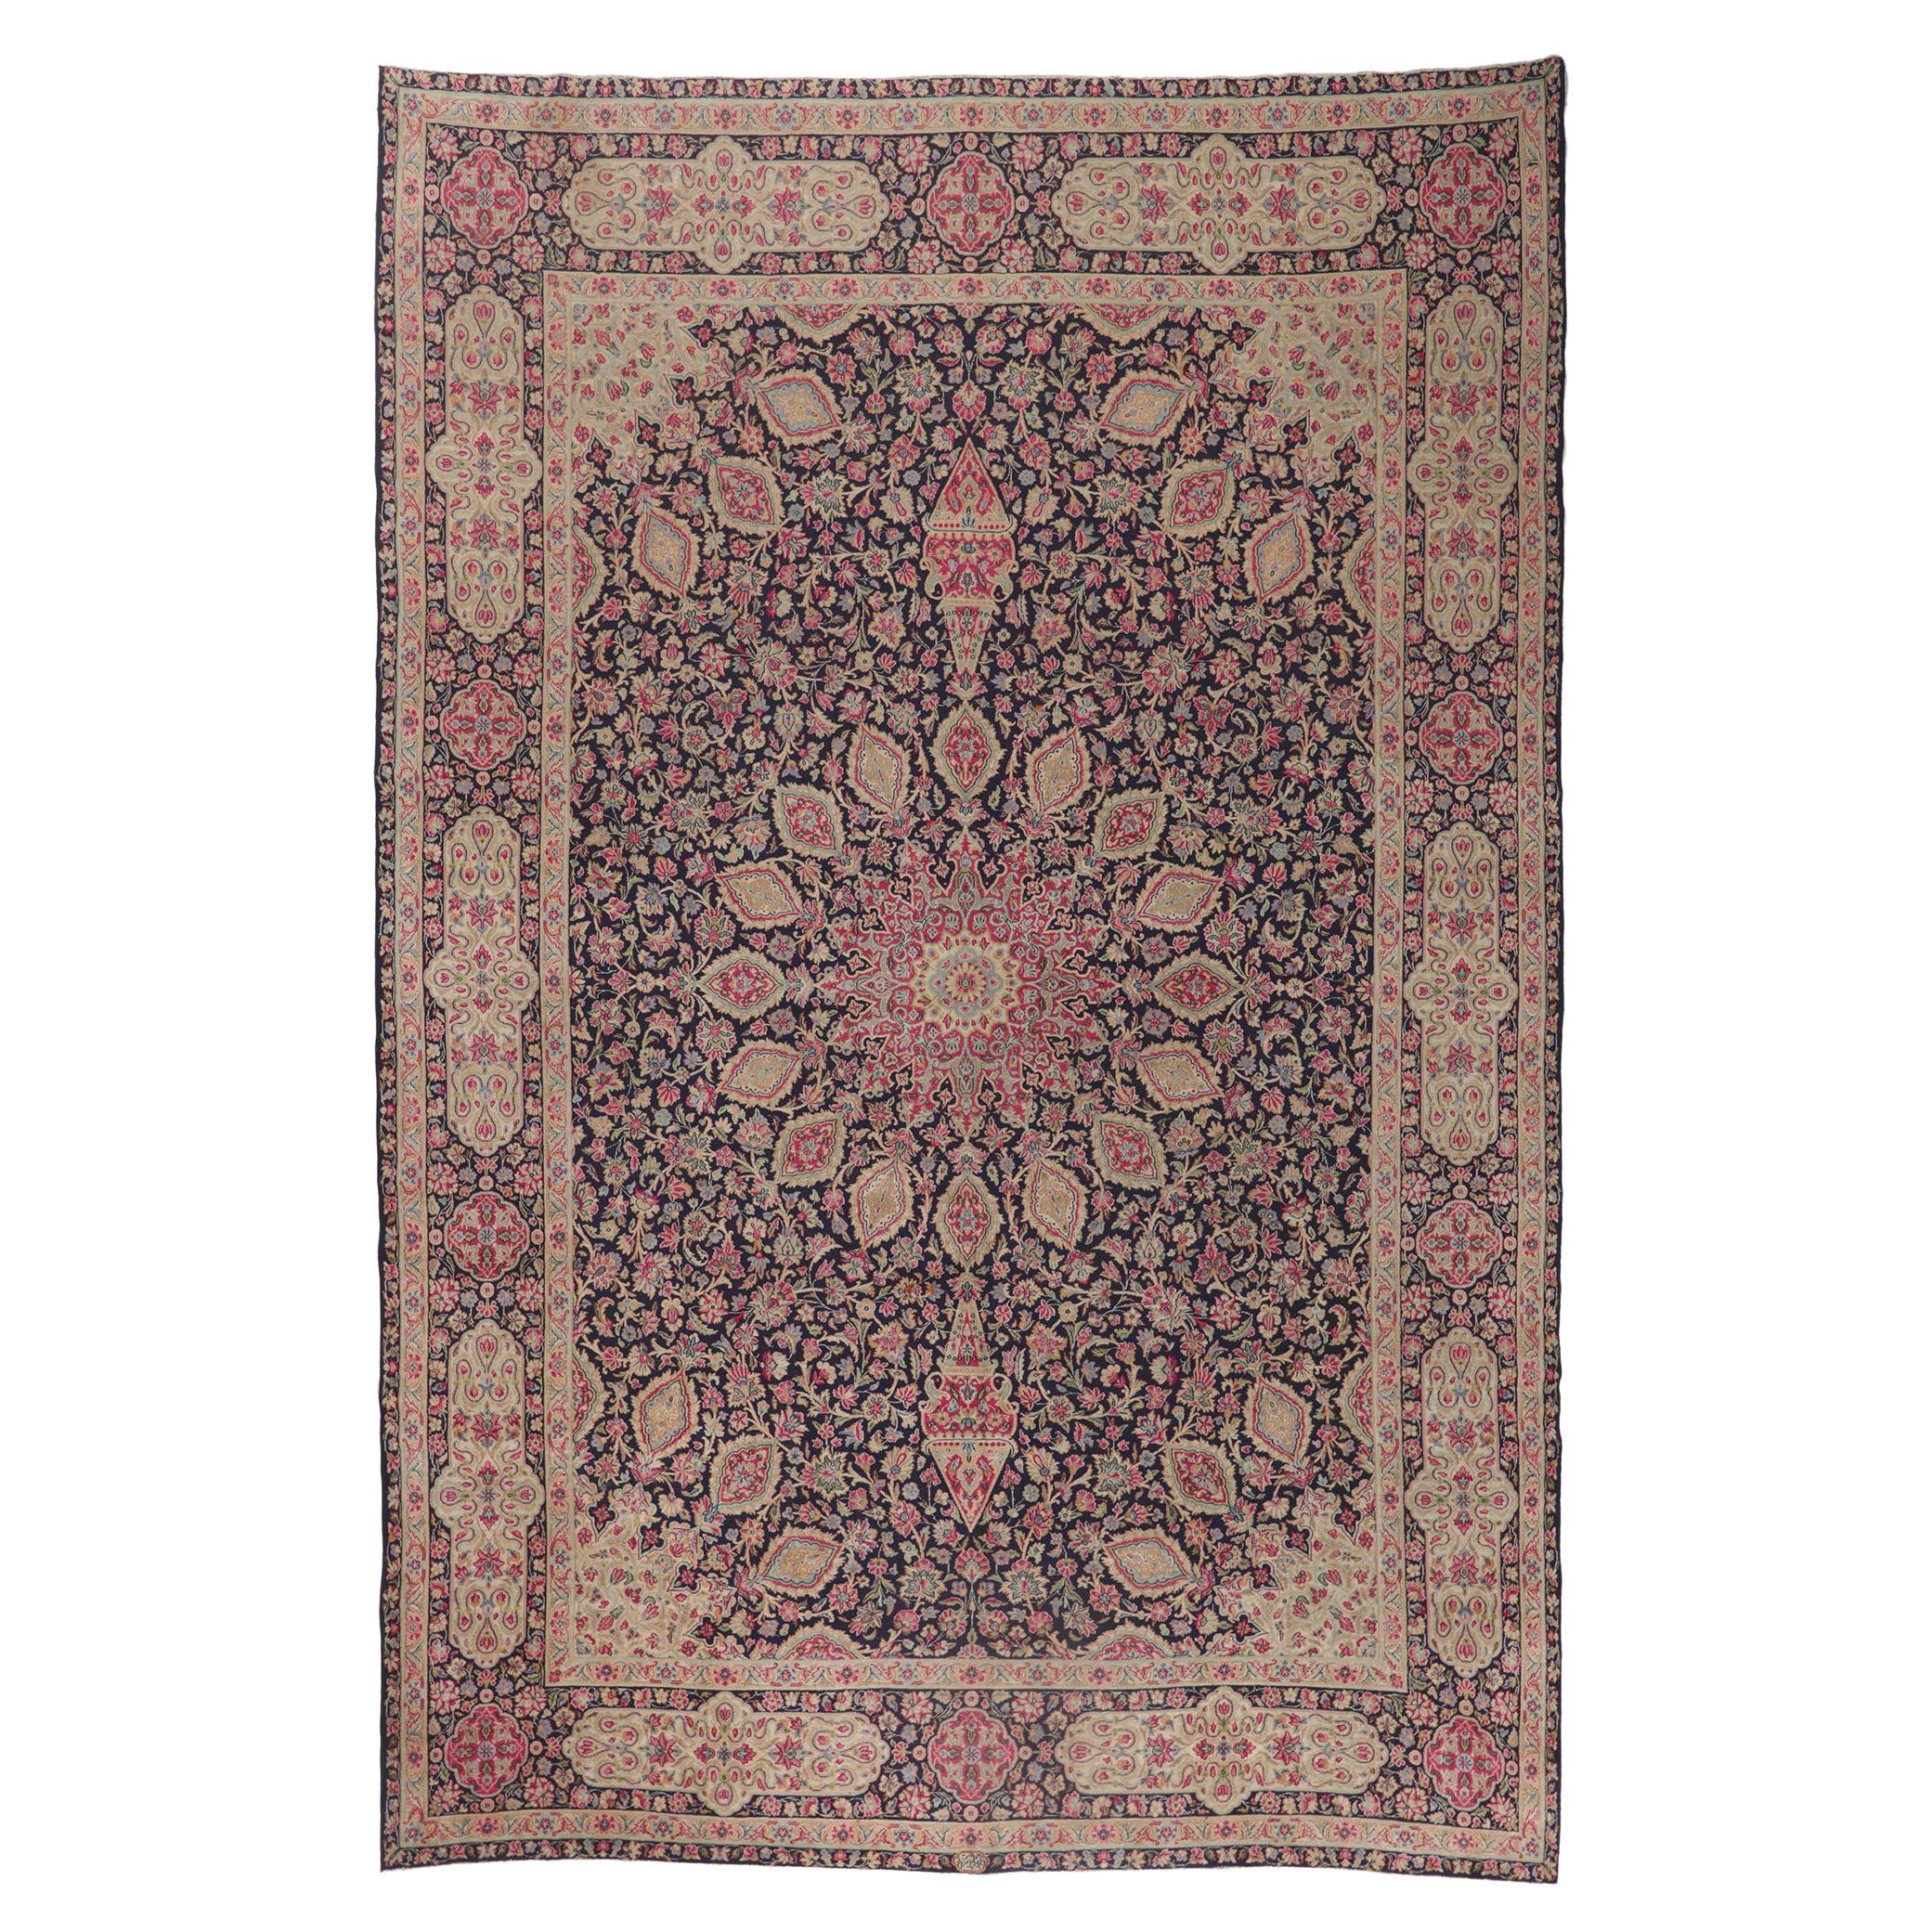 Antique Persian Kerman Rug with The Ardabil Carpet Design